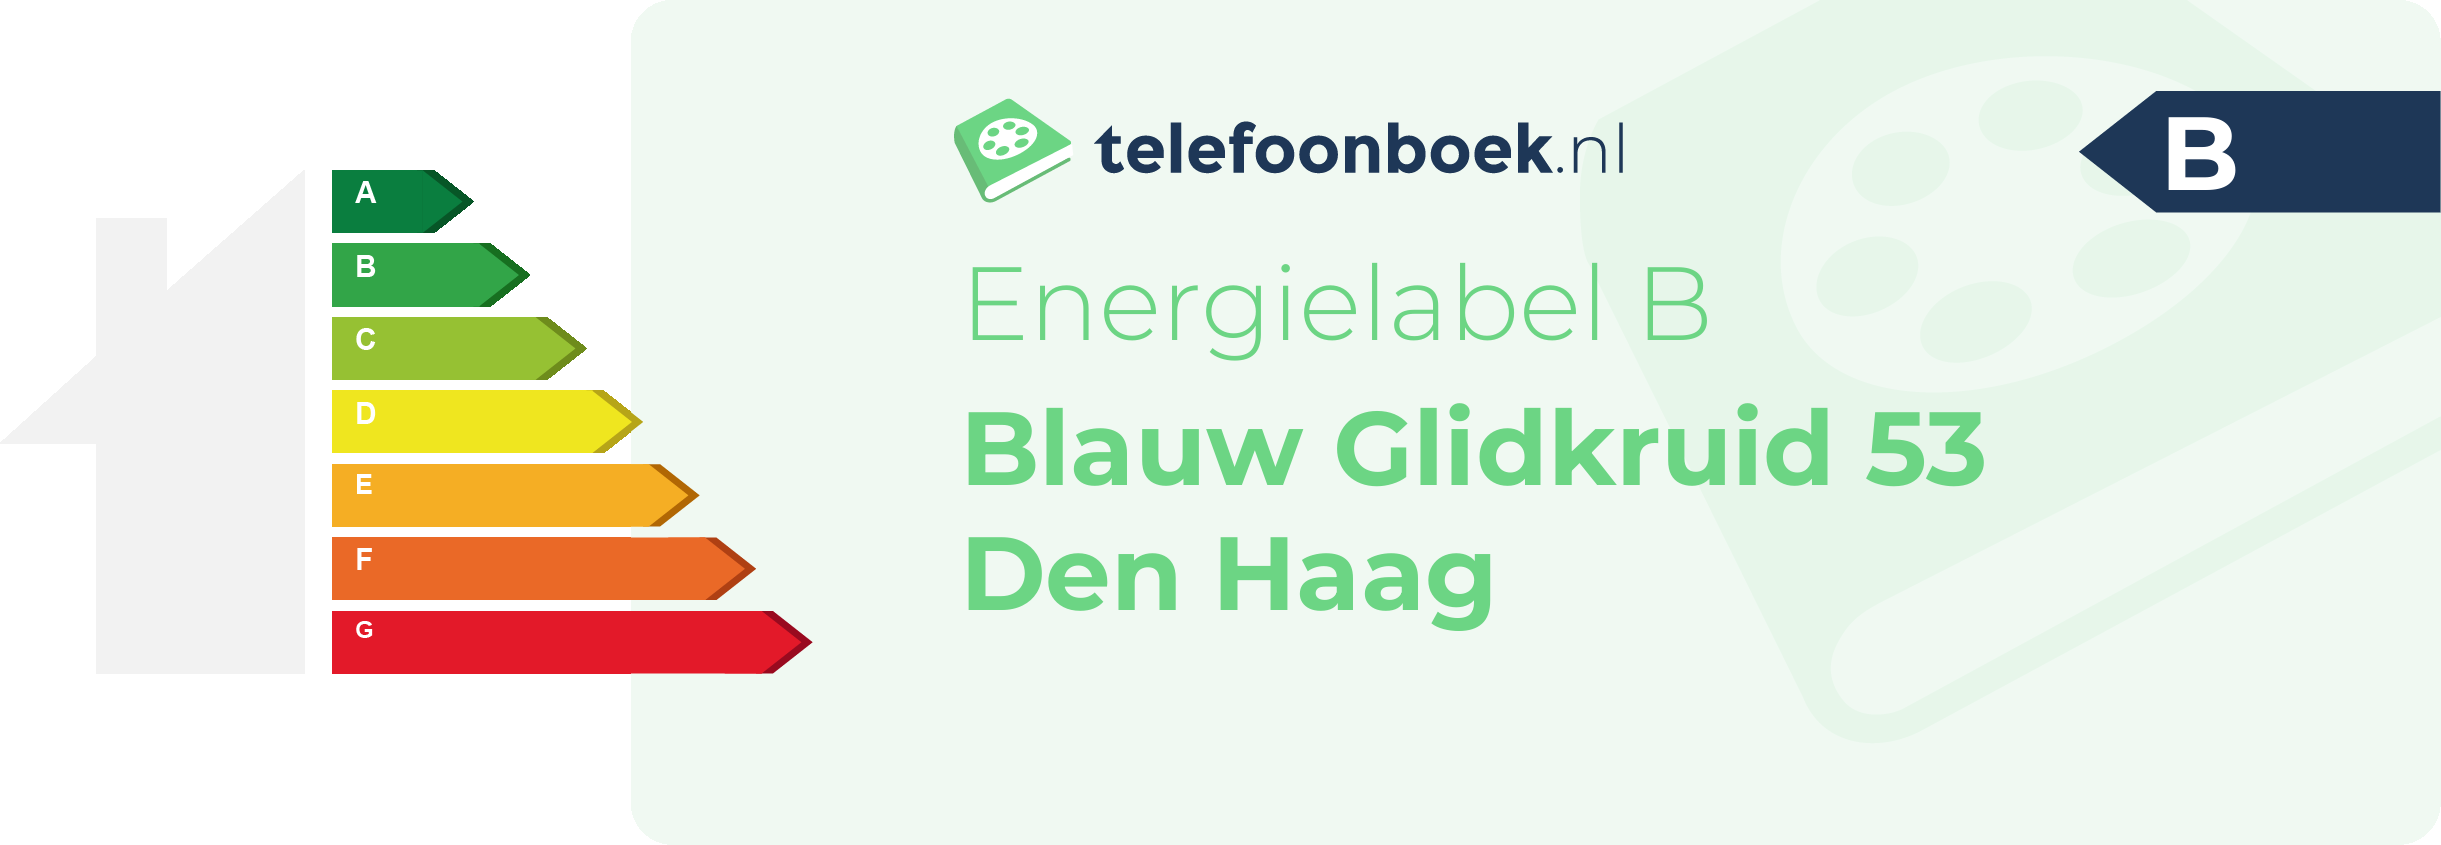 Energielabel Blauw Glidkruid 53 Den Haag